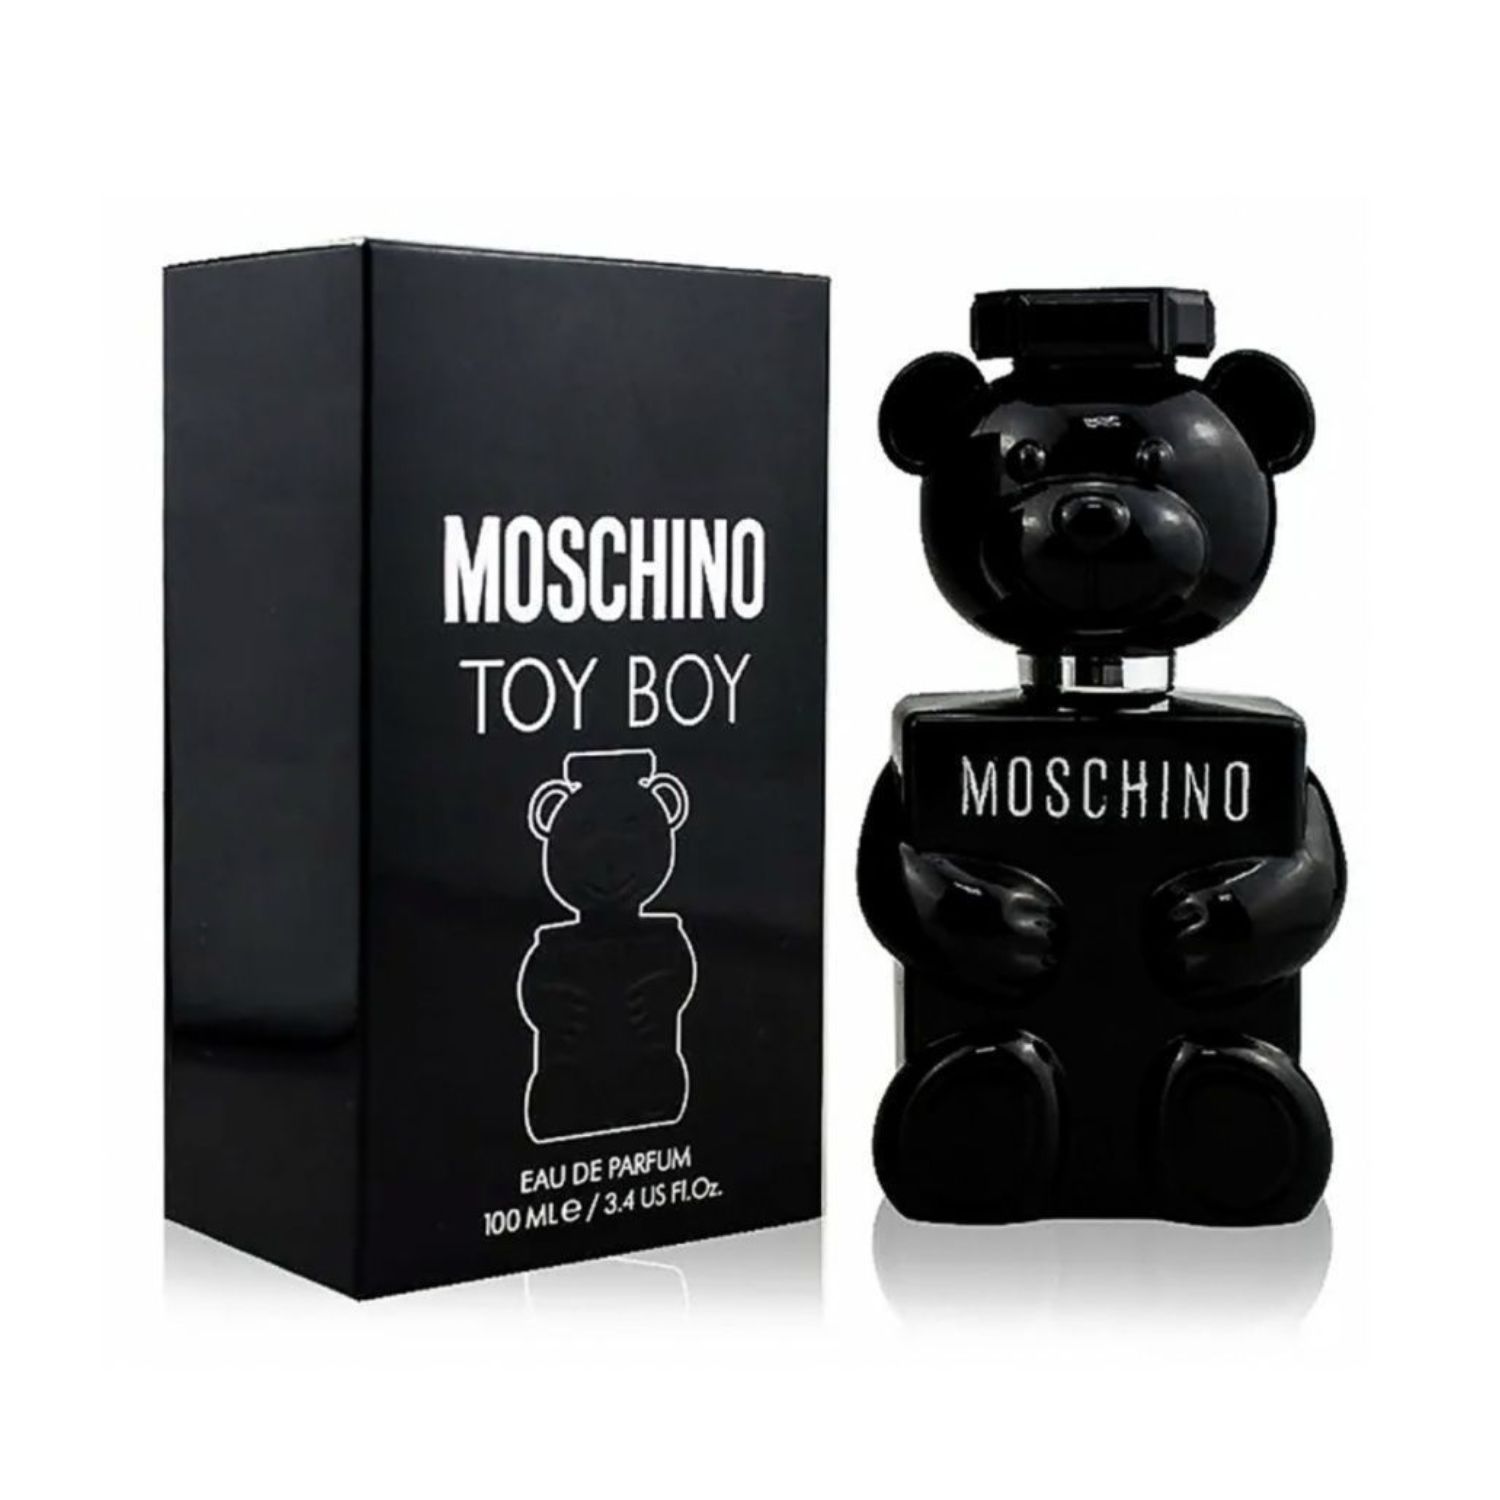 Moschino Toy boy Eau de Parfum. Moschino Toy boy Eau de Parfum 100 ml. Moschino Toy boy 100ml EDP. Moschino Toy boy 2. Москино духи медведь